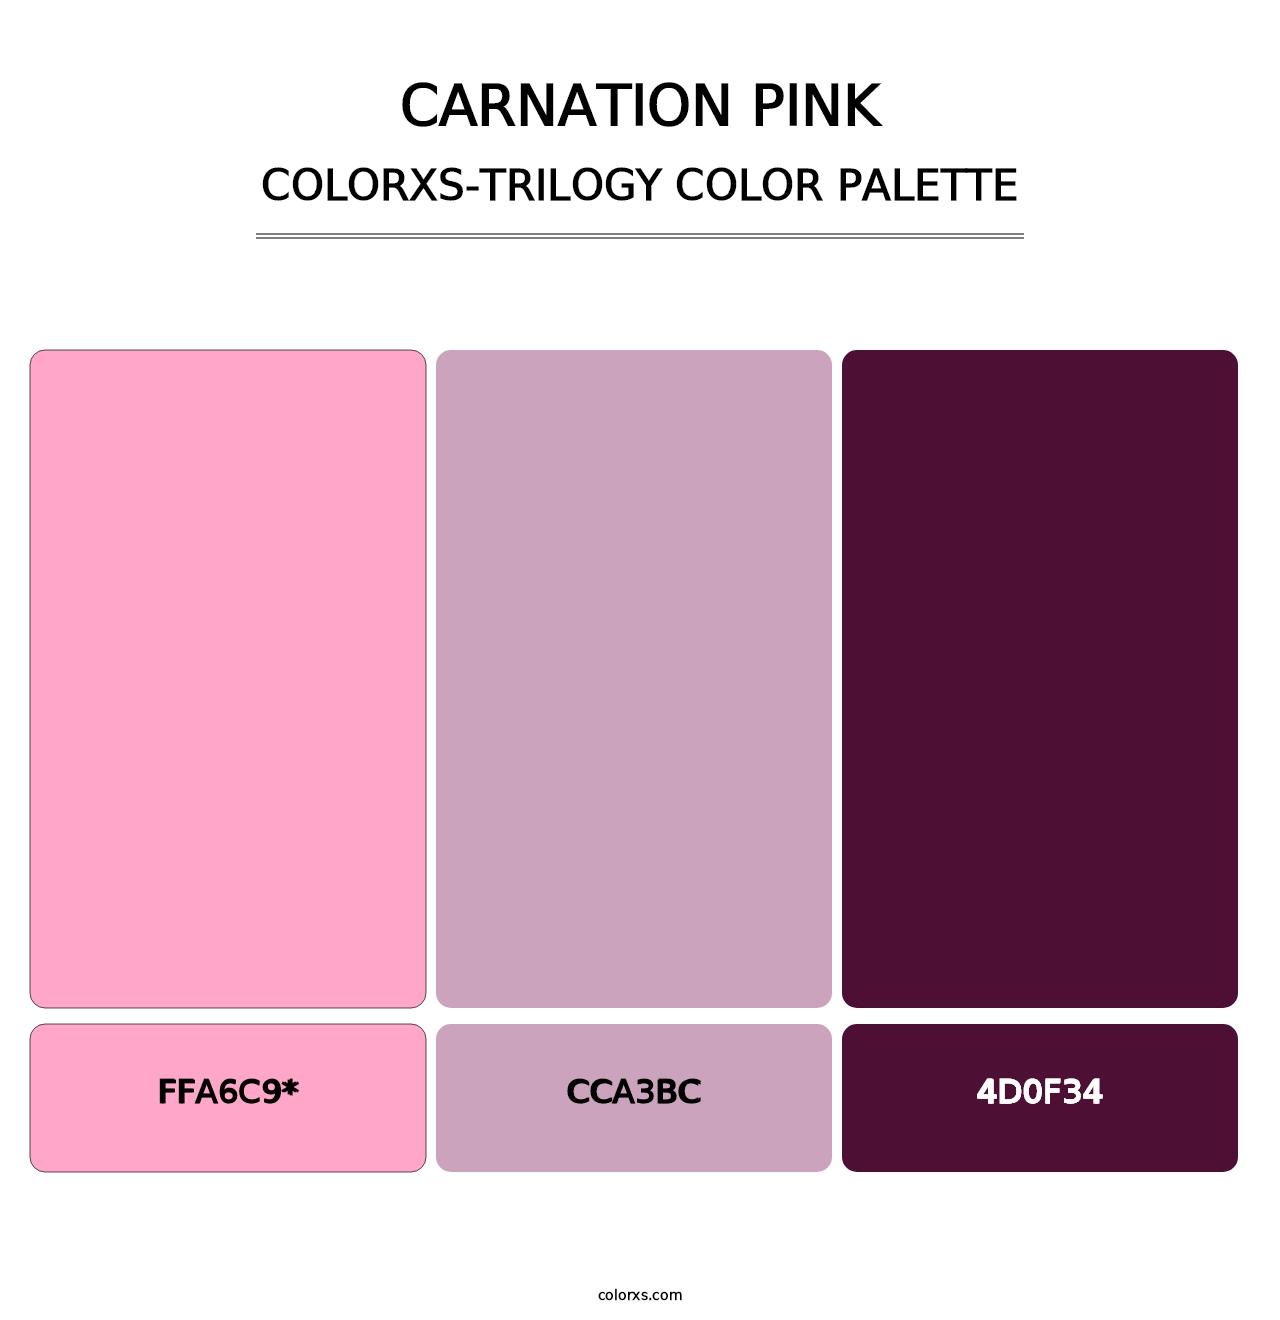 Carnation Pink - Colorxs Trilogy Palette